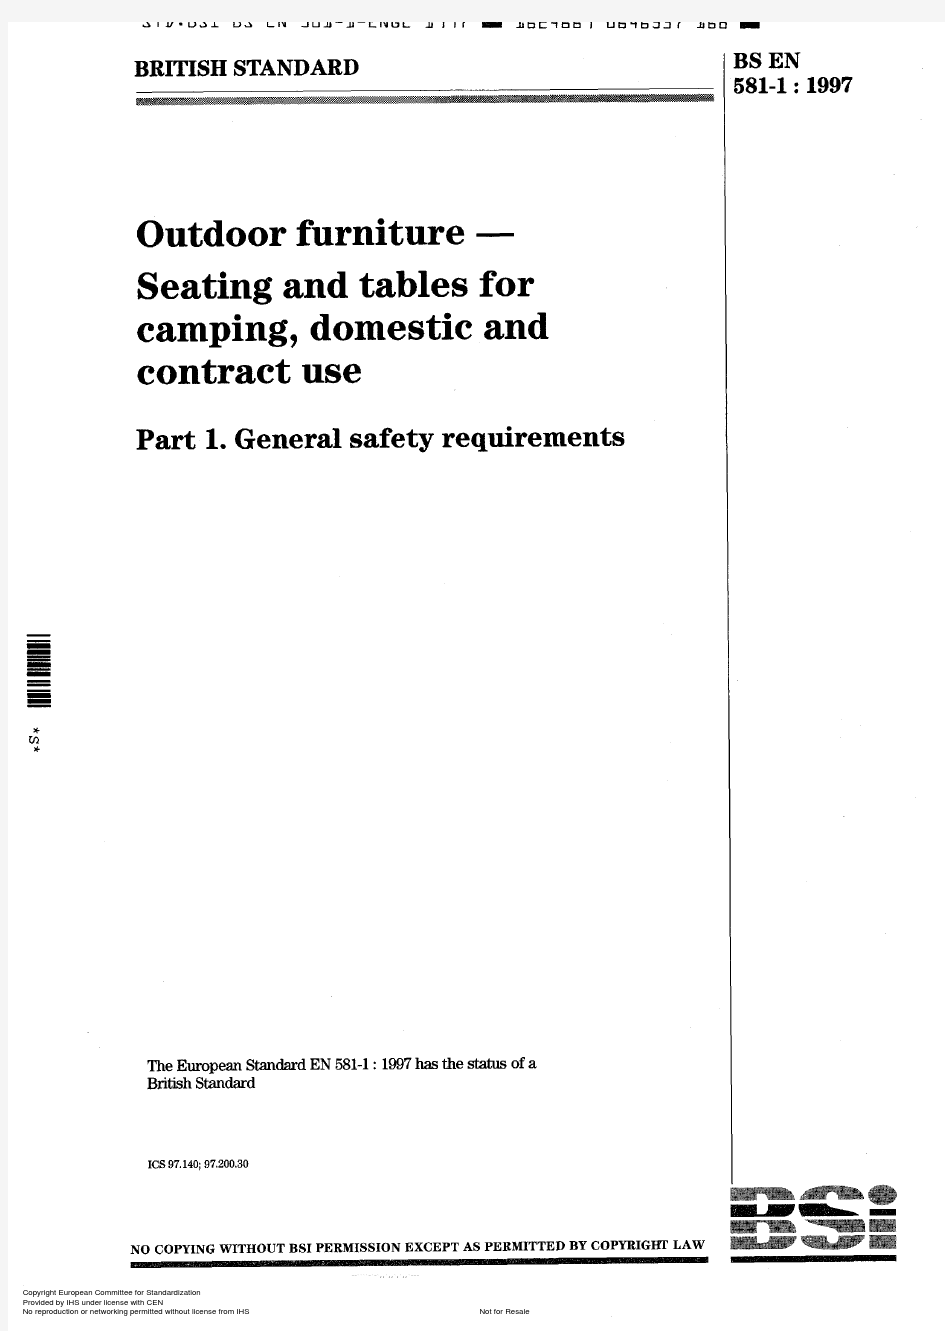 BS EN 581-1-1997 户外家具.野营、家用和订做的座椅和桌子.一般安全要求